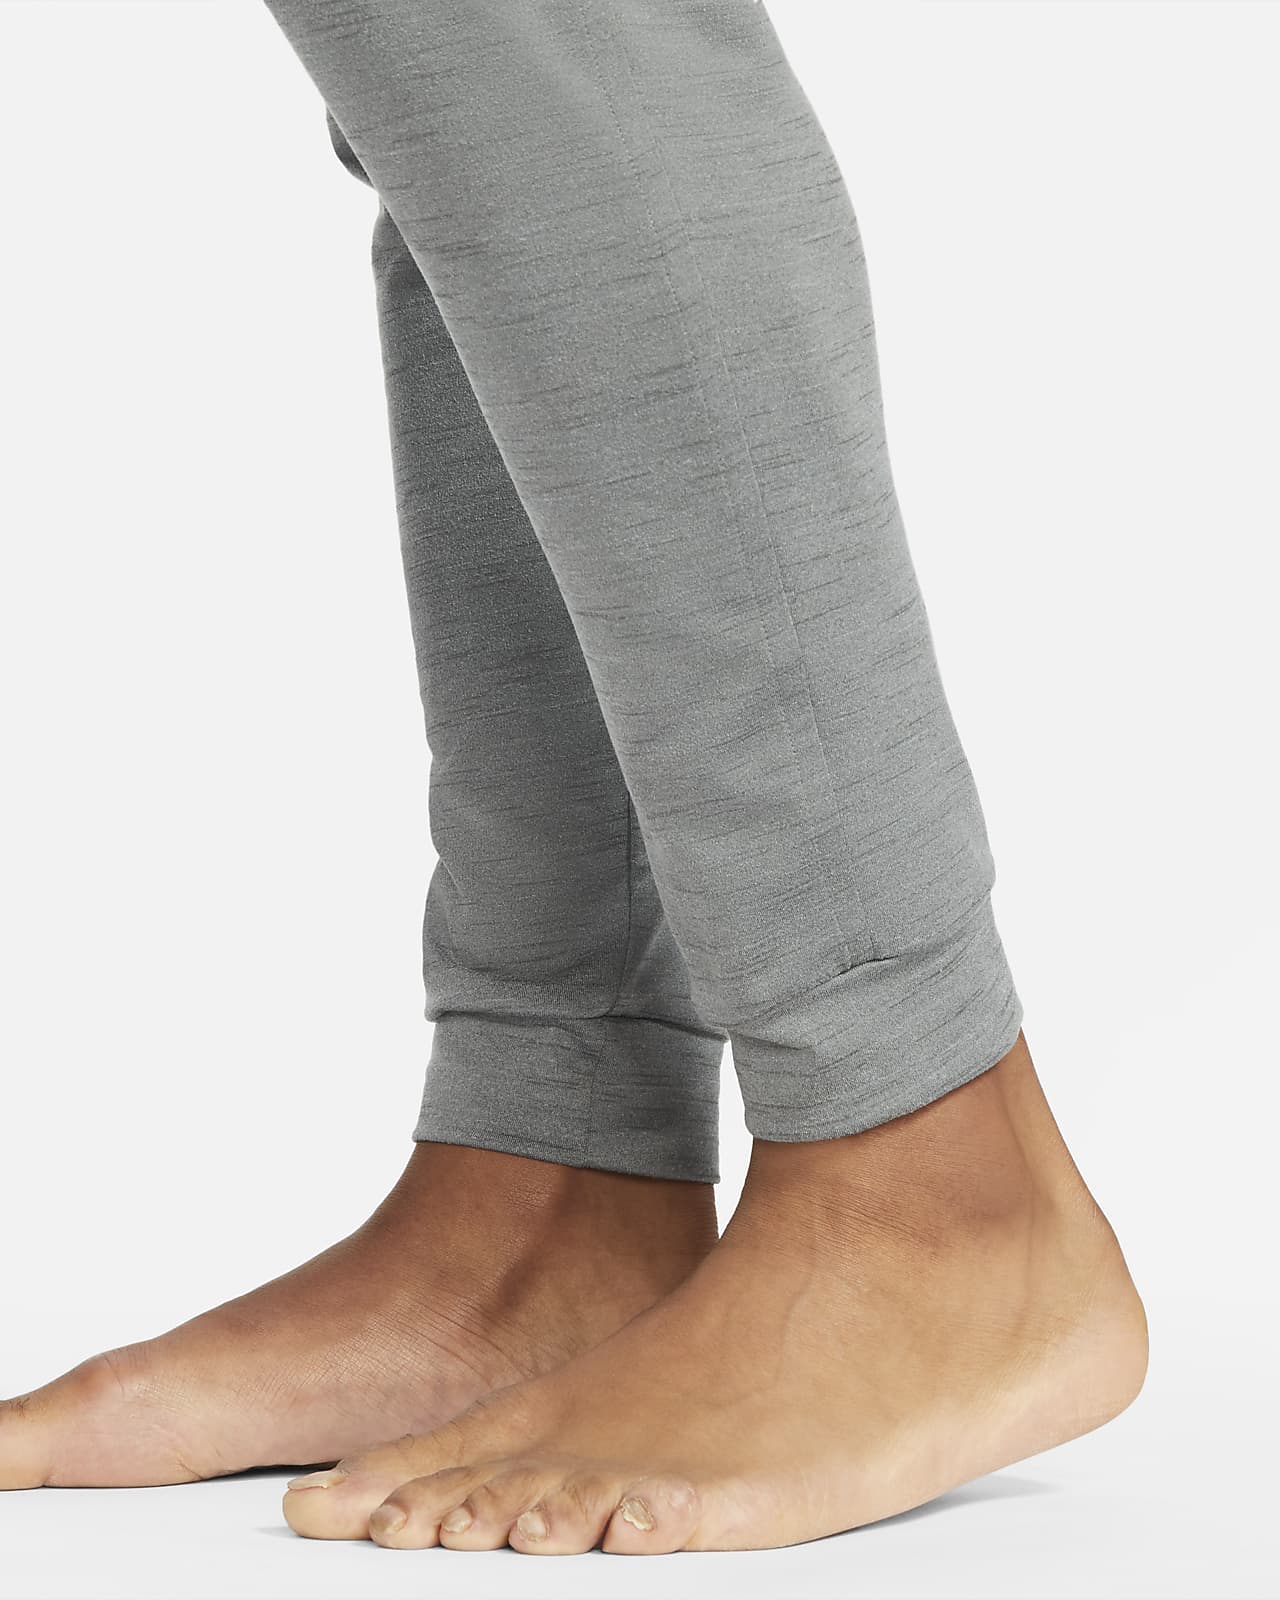  Nike Men Yoga Dri-FIT Pants (as1, Alpha, s, Regular, Regular,  Off Noir/Black) : Clothing, Shoes & Jewelry